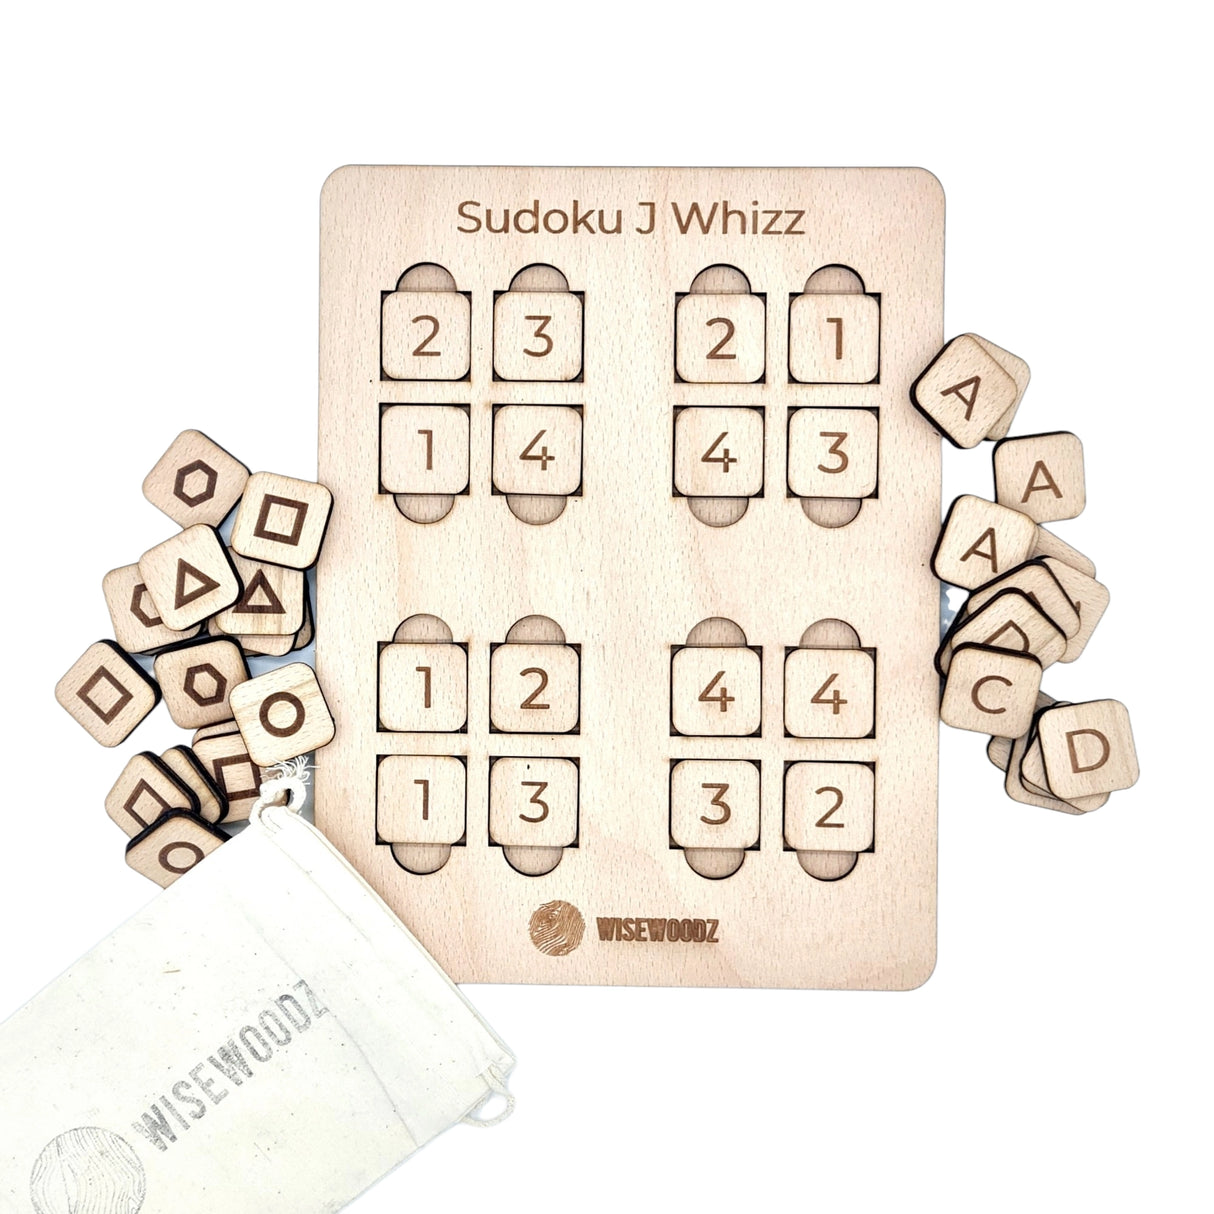 Sudoku medium difficulty help - Puzzling Stack Exchange